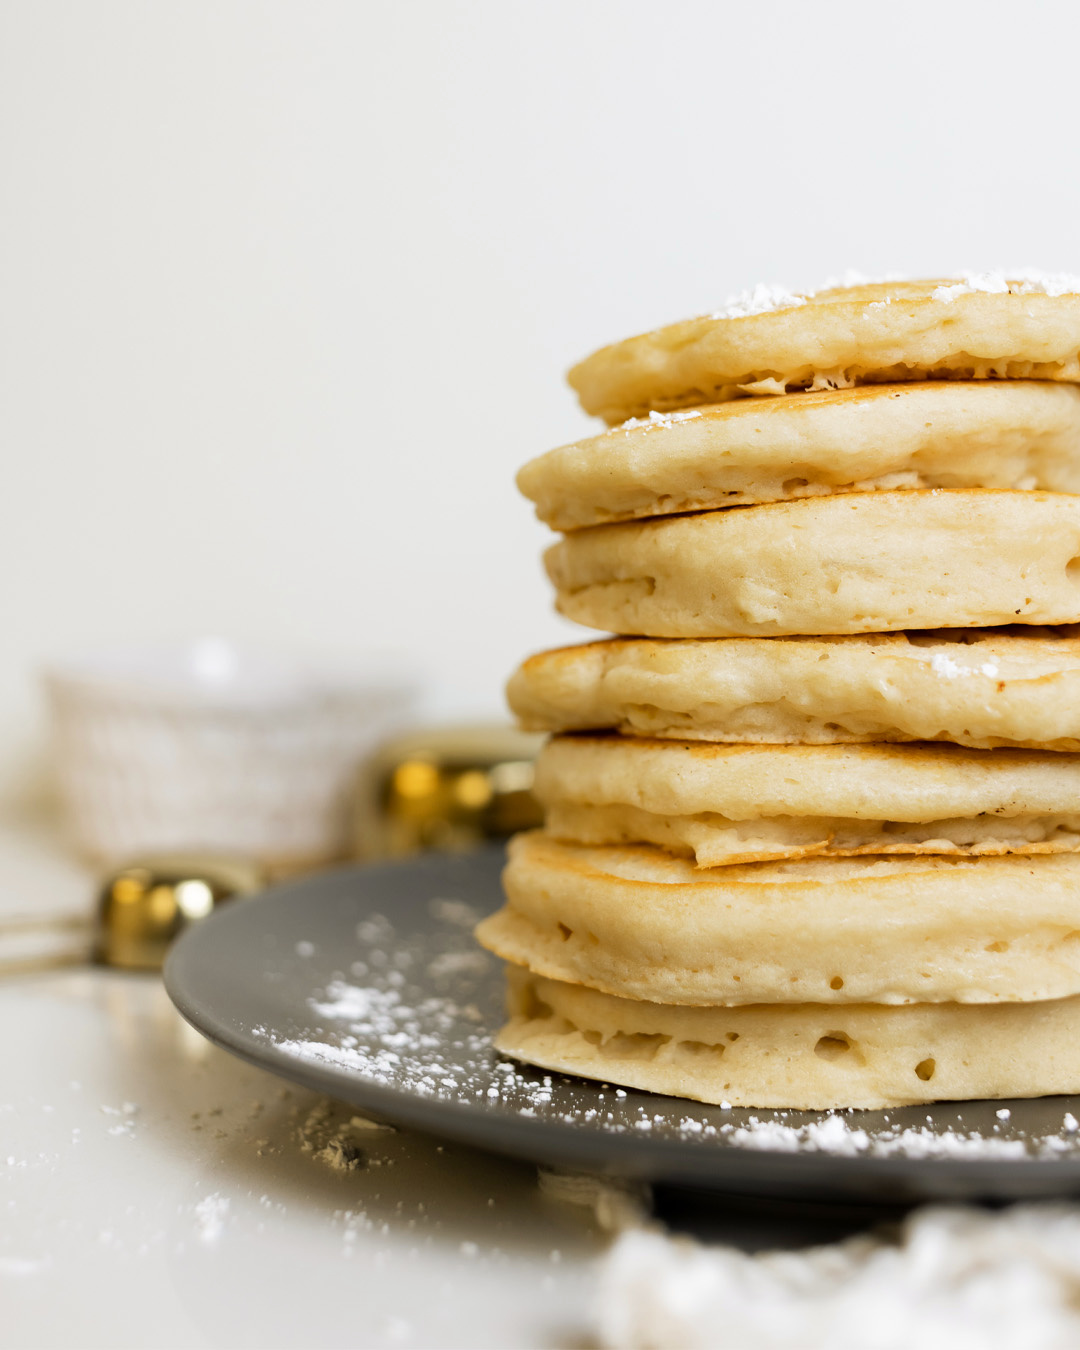 A stack of homemade vegan pancakes